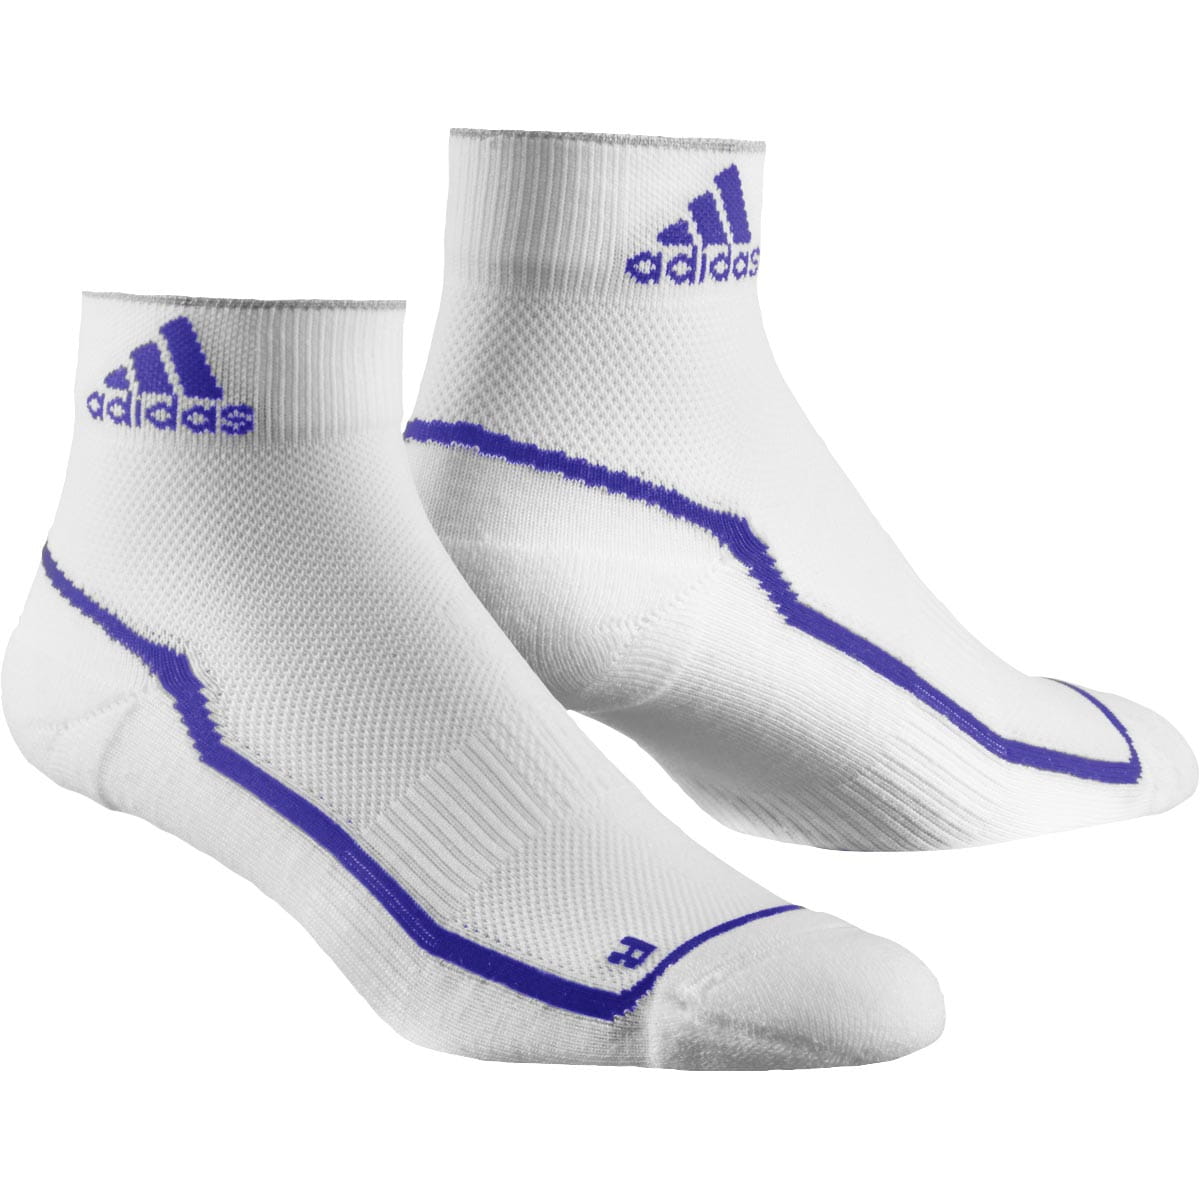 Ponožky adidas adizero cushioned ankle socks, 1 pair